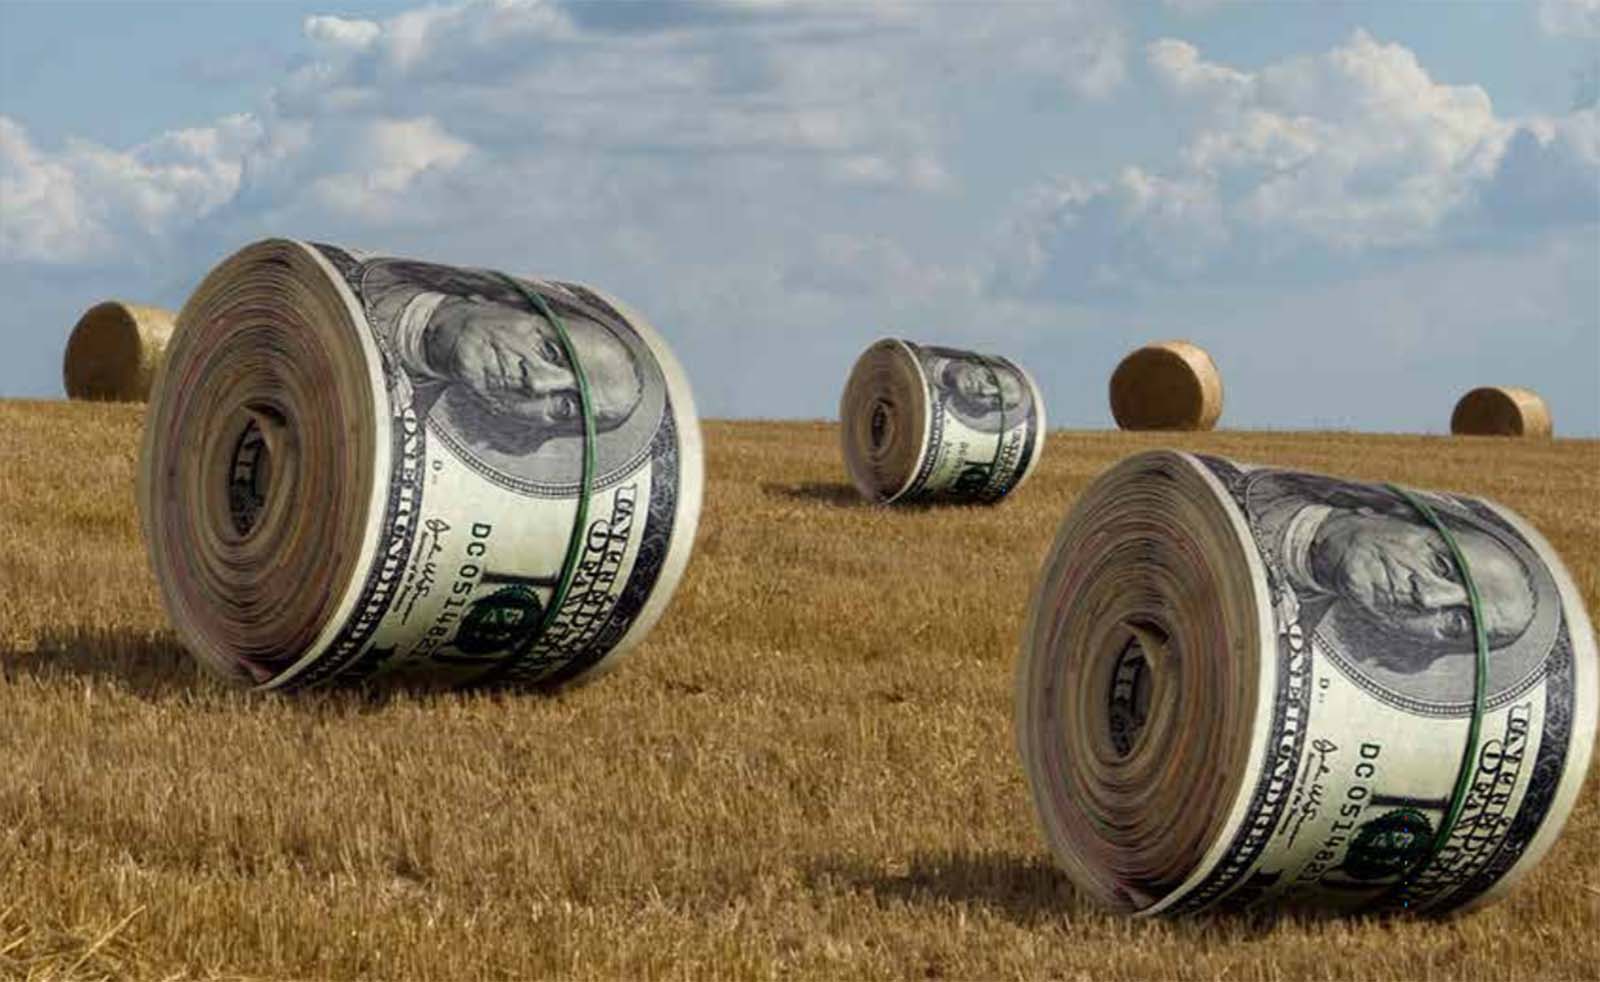 Rolls of dollar bills in a field